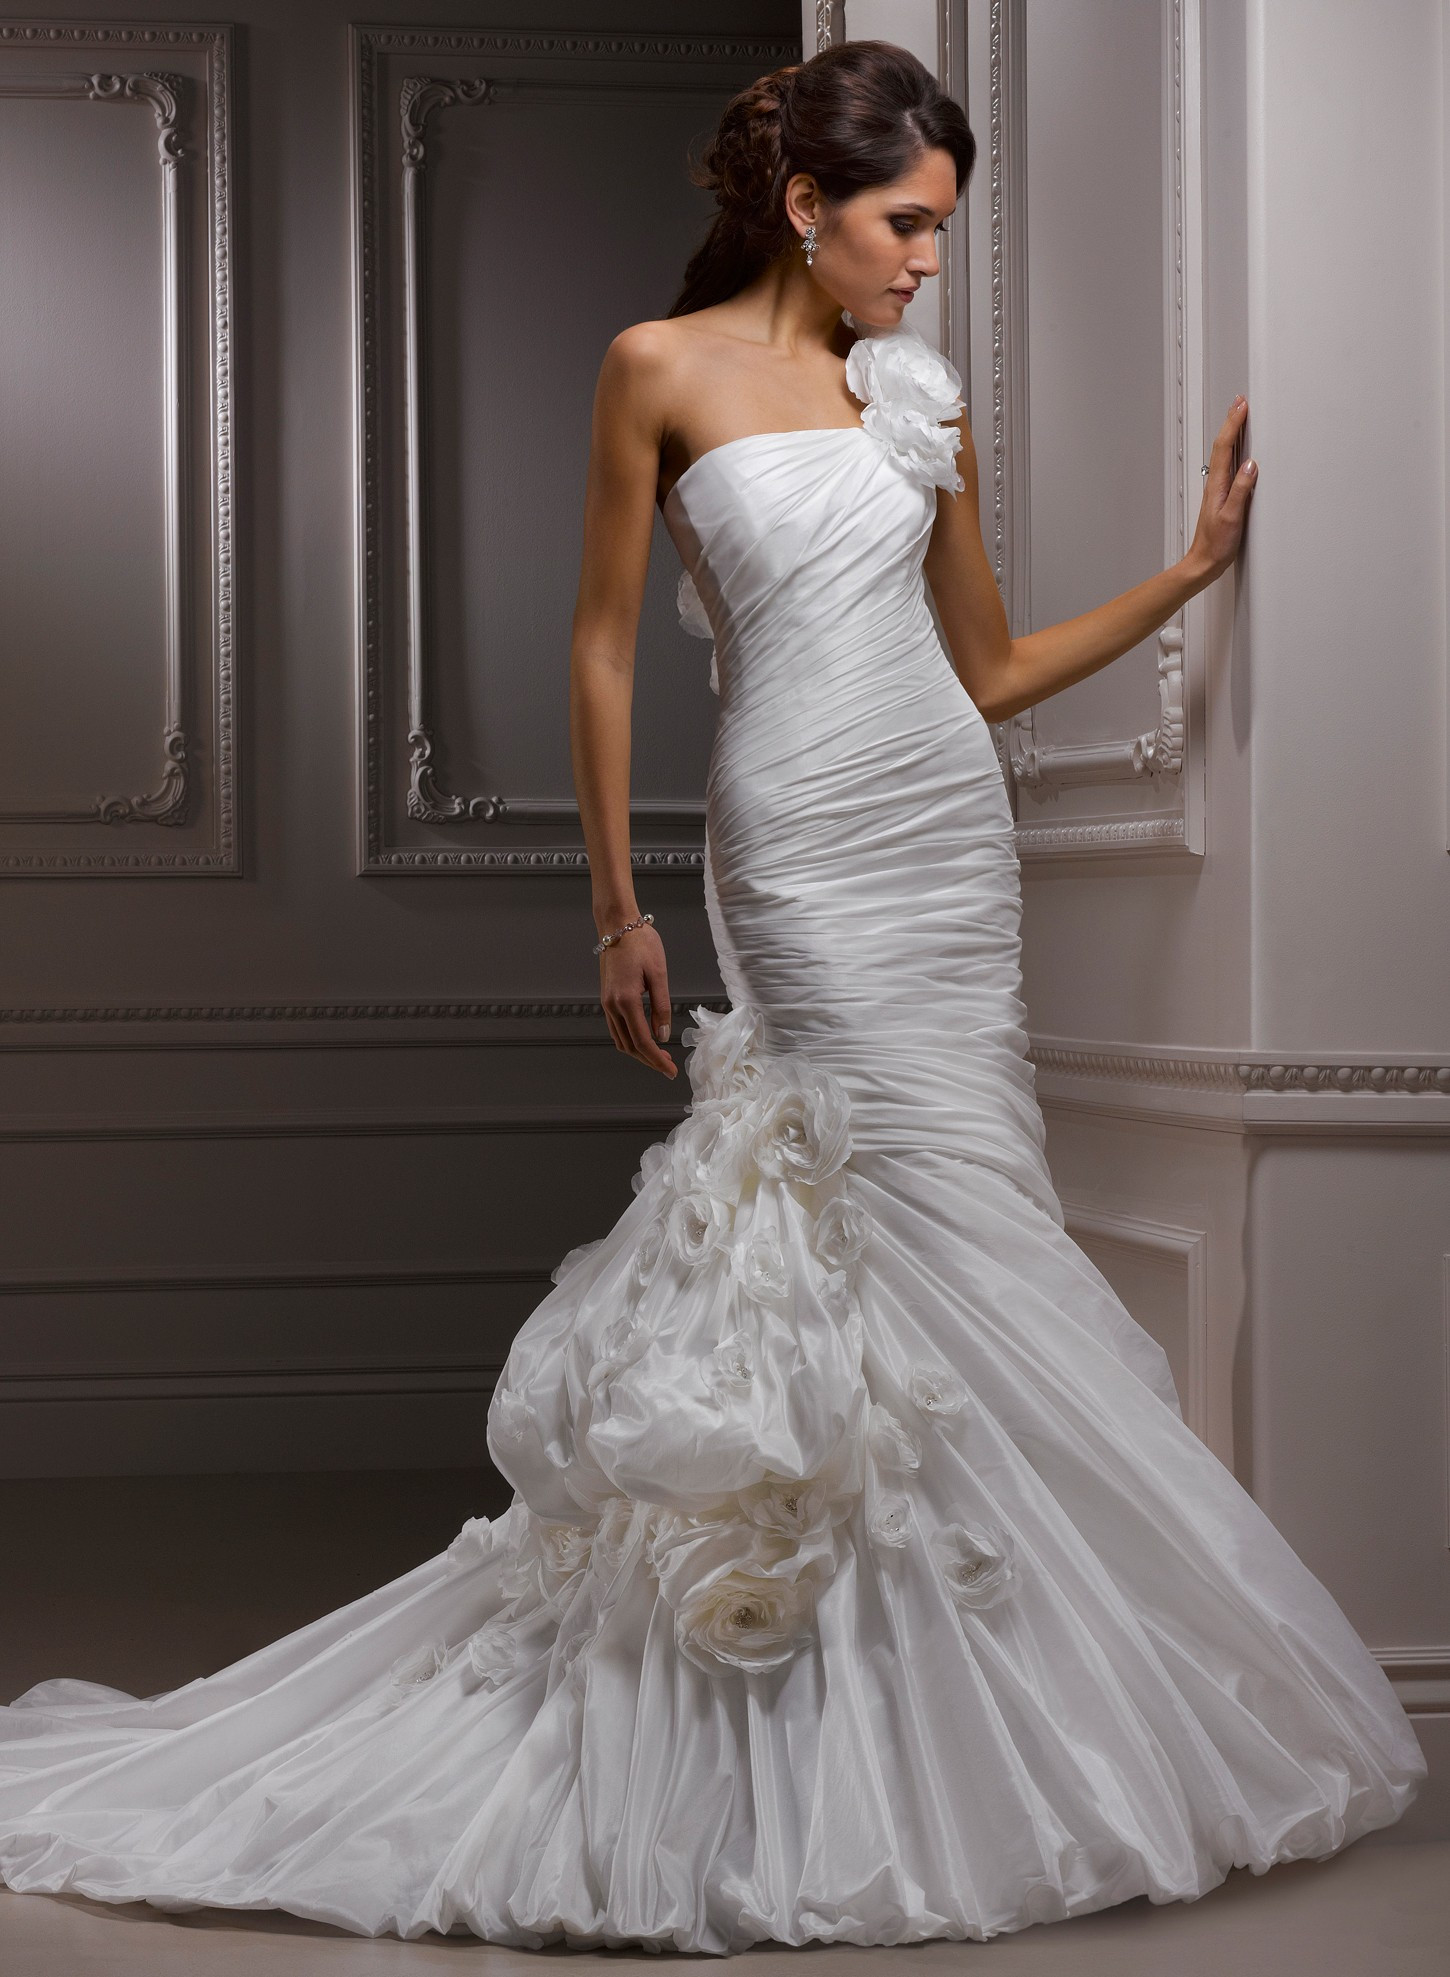 Mermaid Wedding Gown
 Mermaid Wedding Dresses – An Elegant Choice For Brides